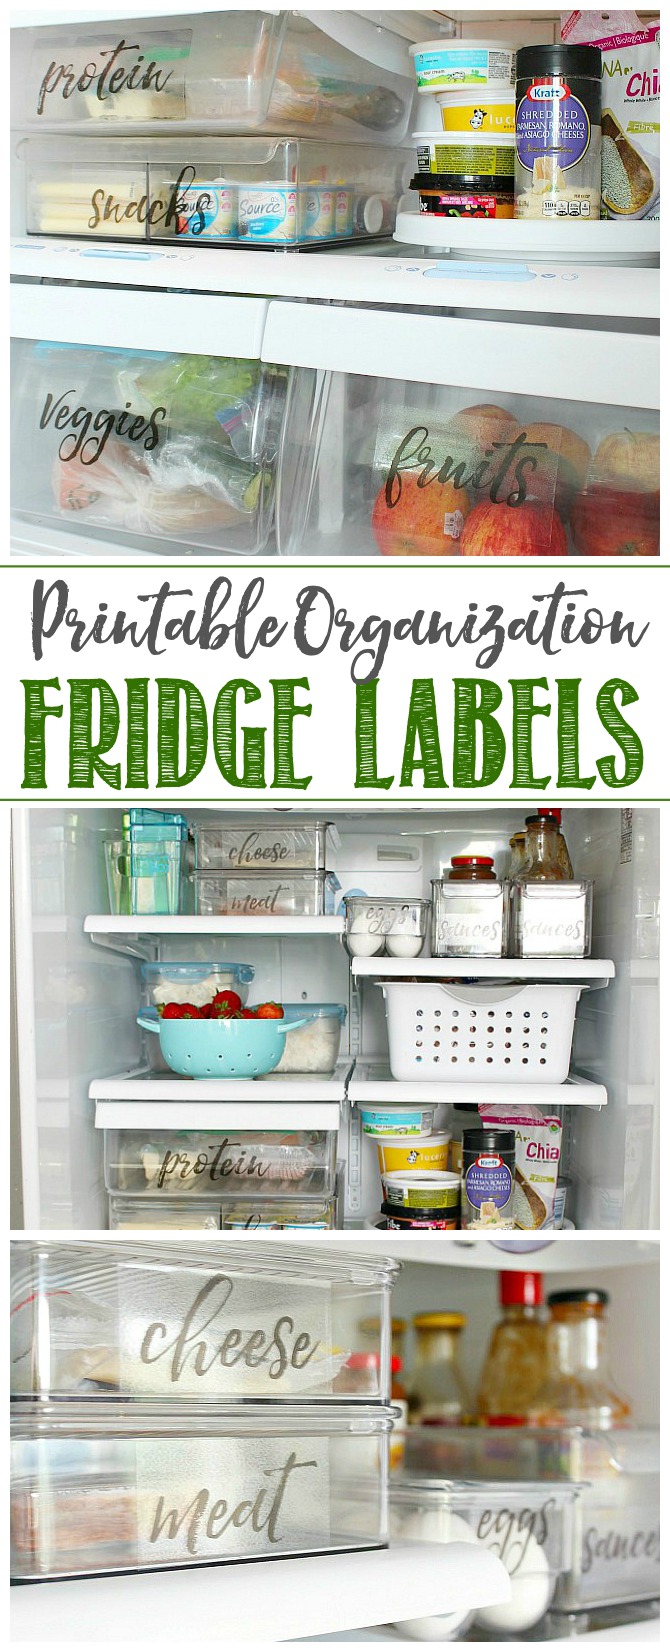 Organized fridge using free printable fridge labels.